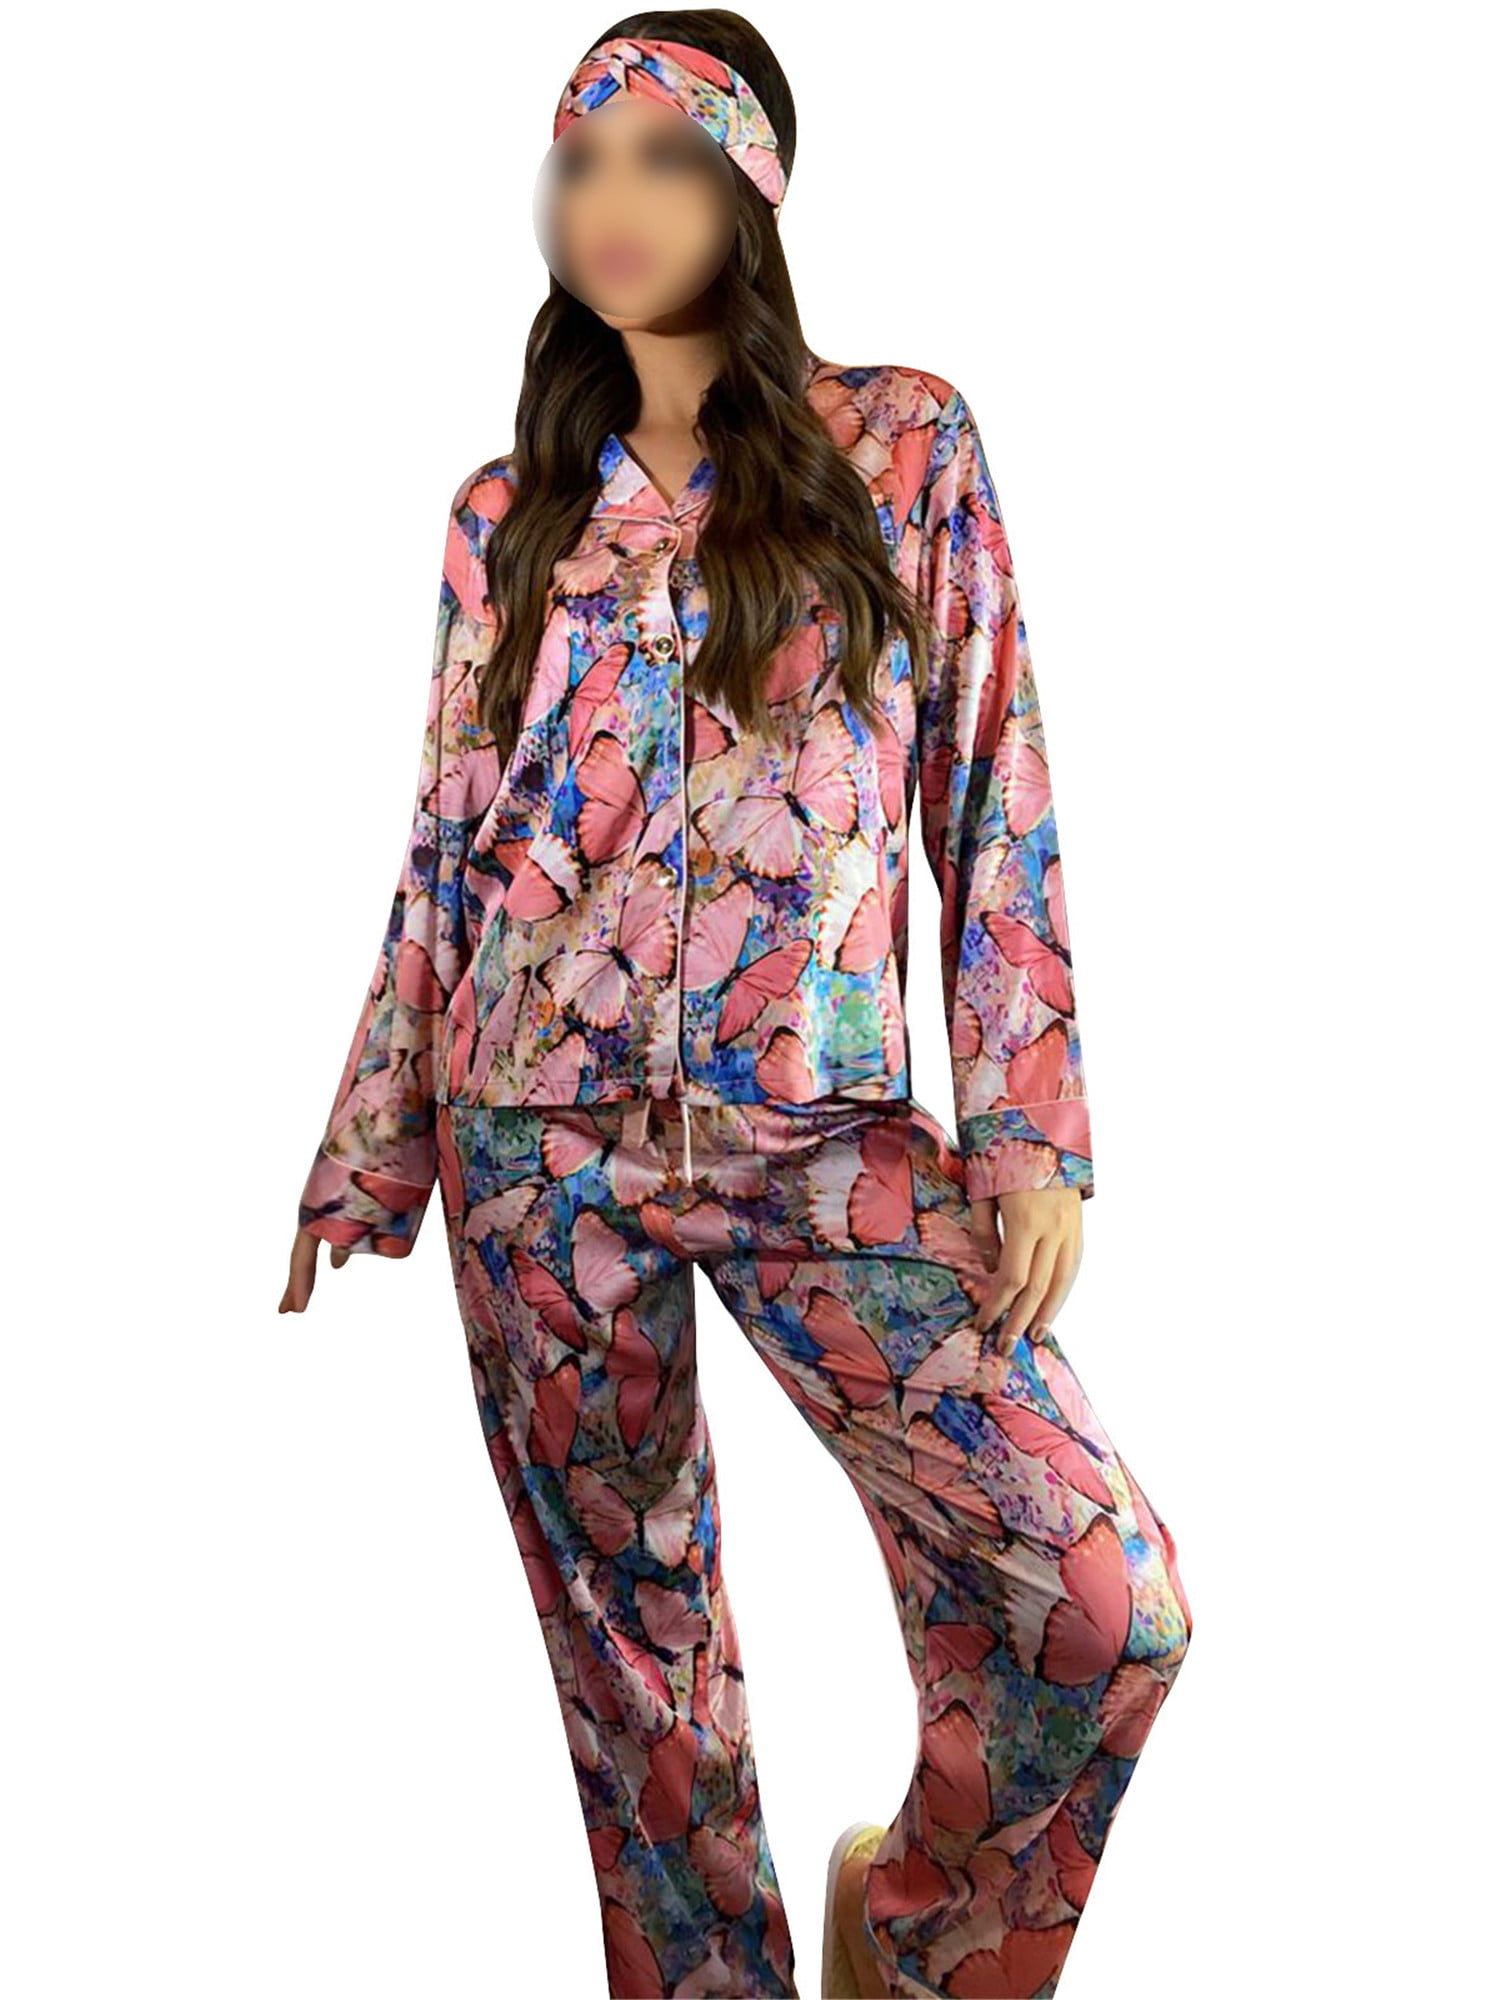 Ladies Girls Pajama Set Pyjamas Pjs Loungewear Patterned Long Sleepwear